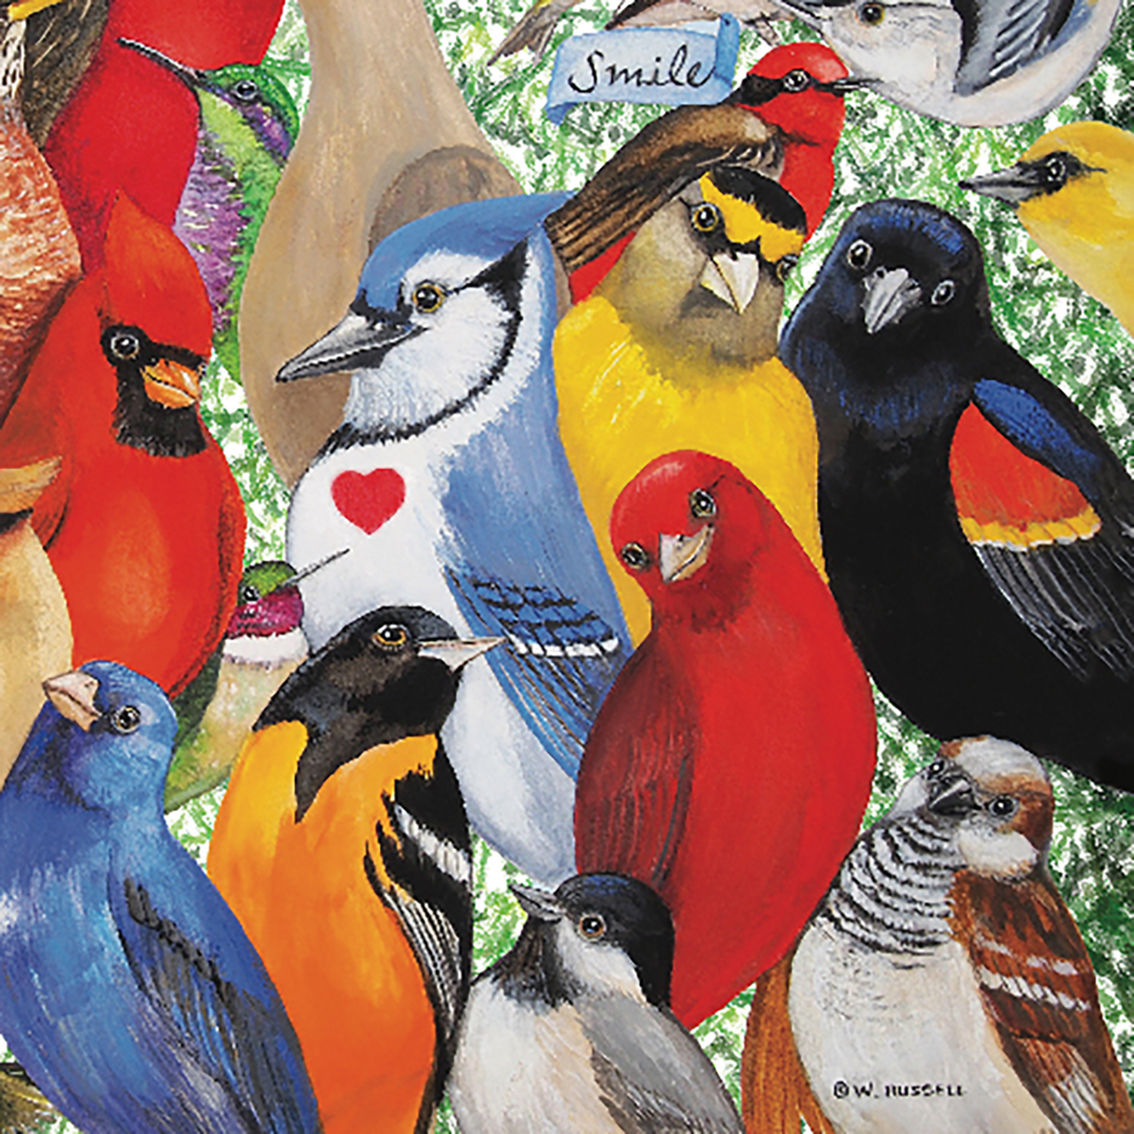 Hart Puzzles Birds, Birds, Birds 1,000 pc. Puzzle - Image 5 of 6